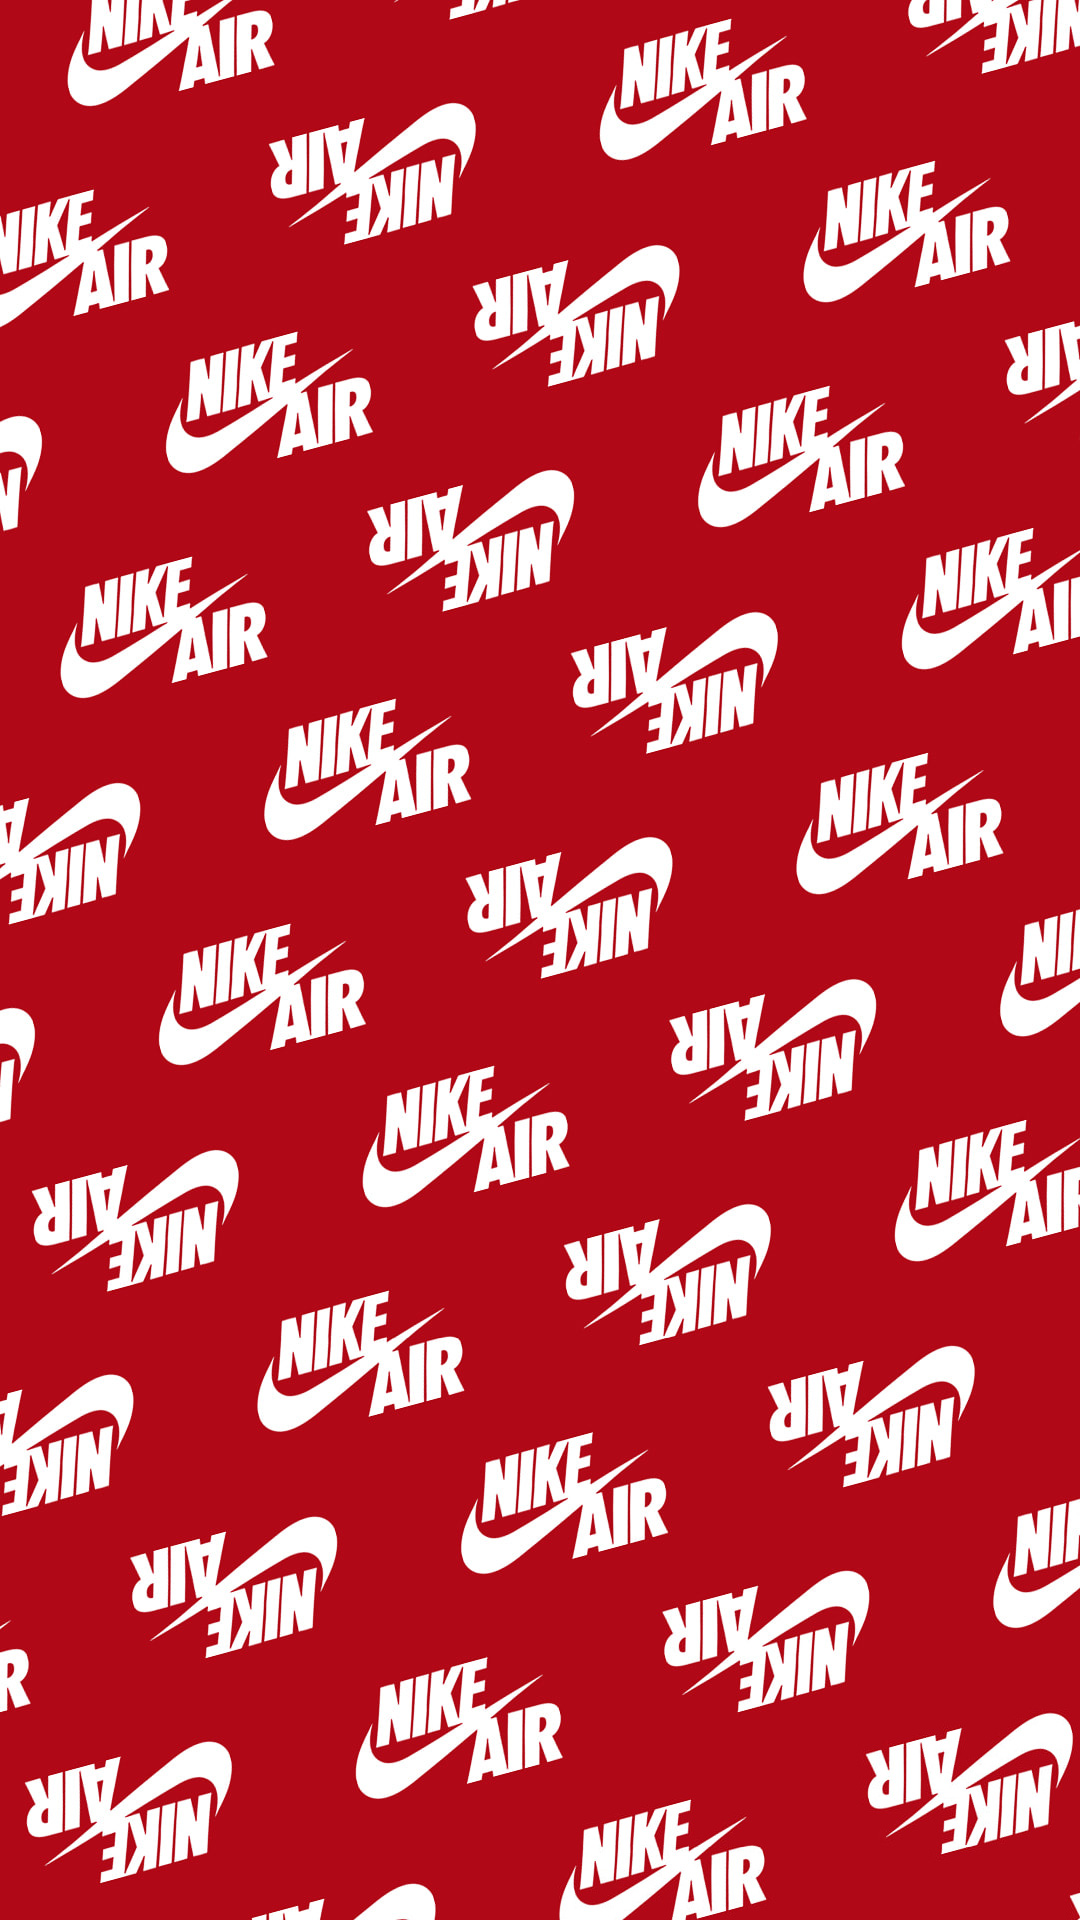 Nike Air Iphone Wallpapers